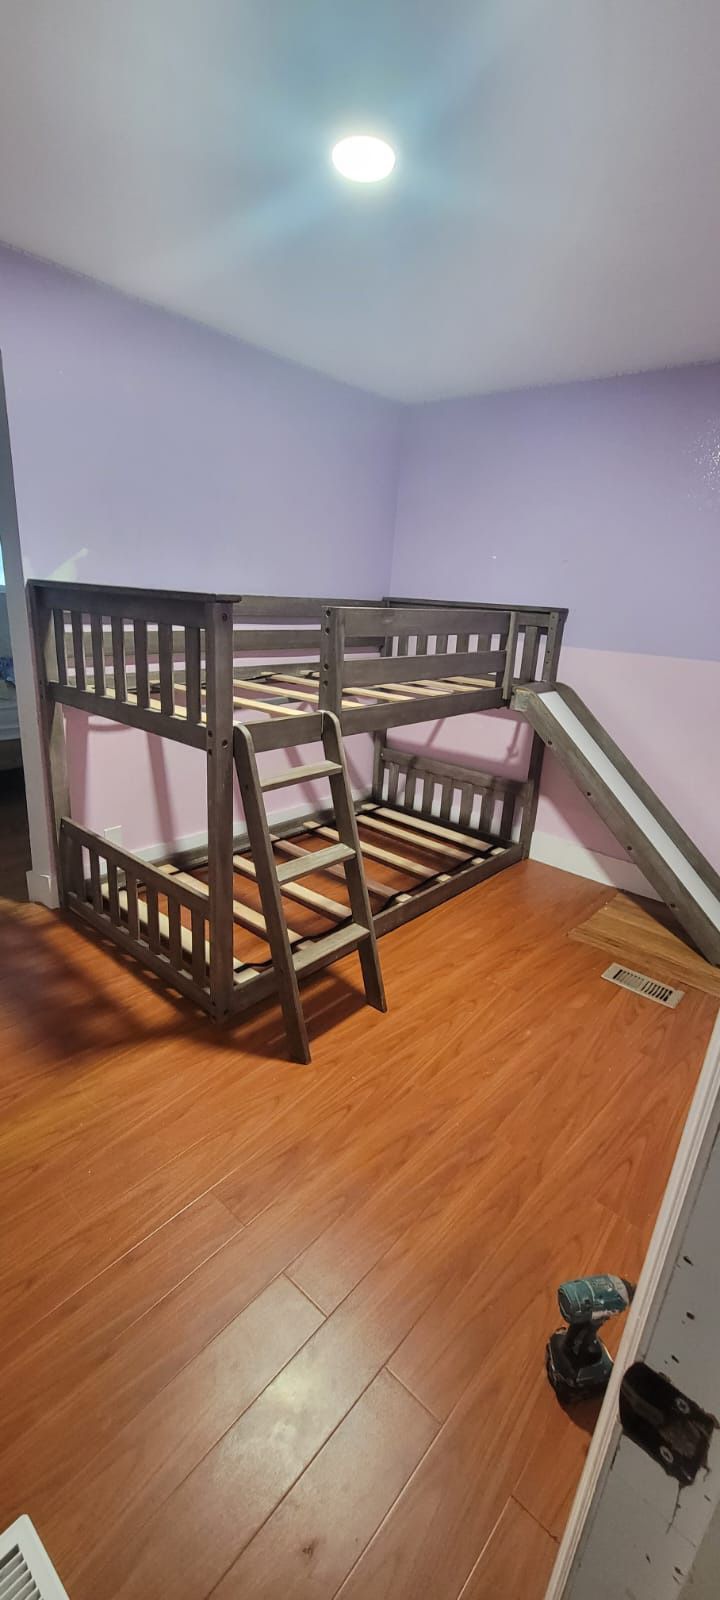  litera doble de baja altura / double bed for children